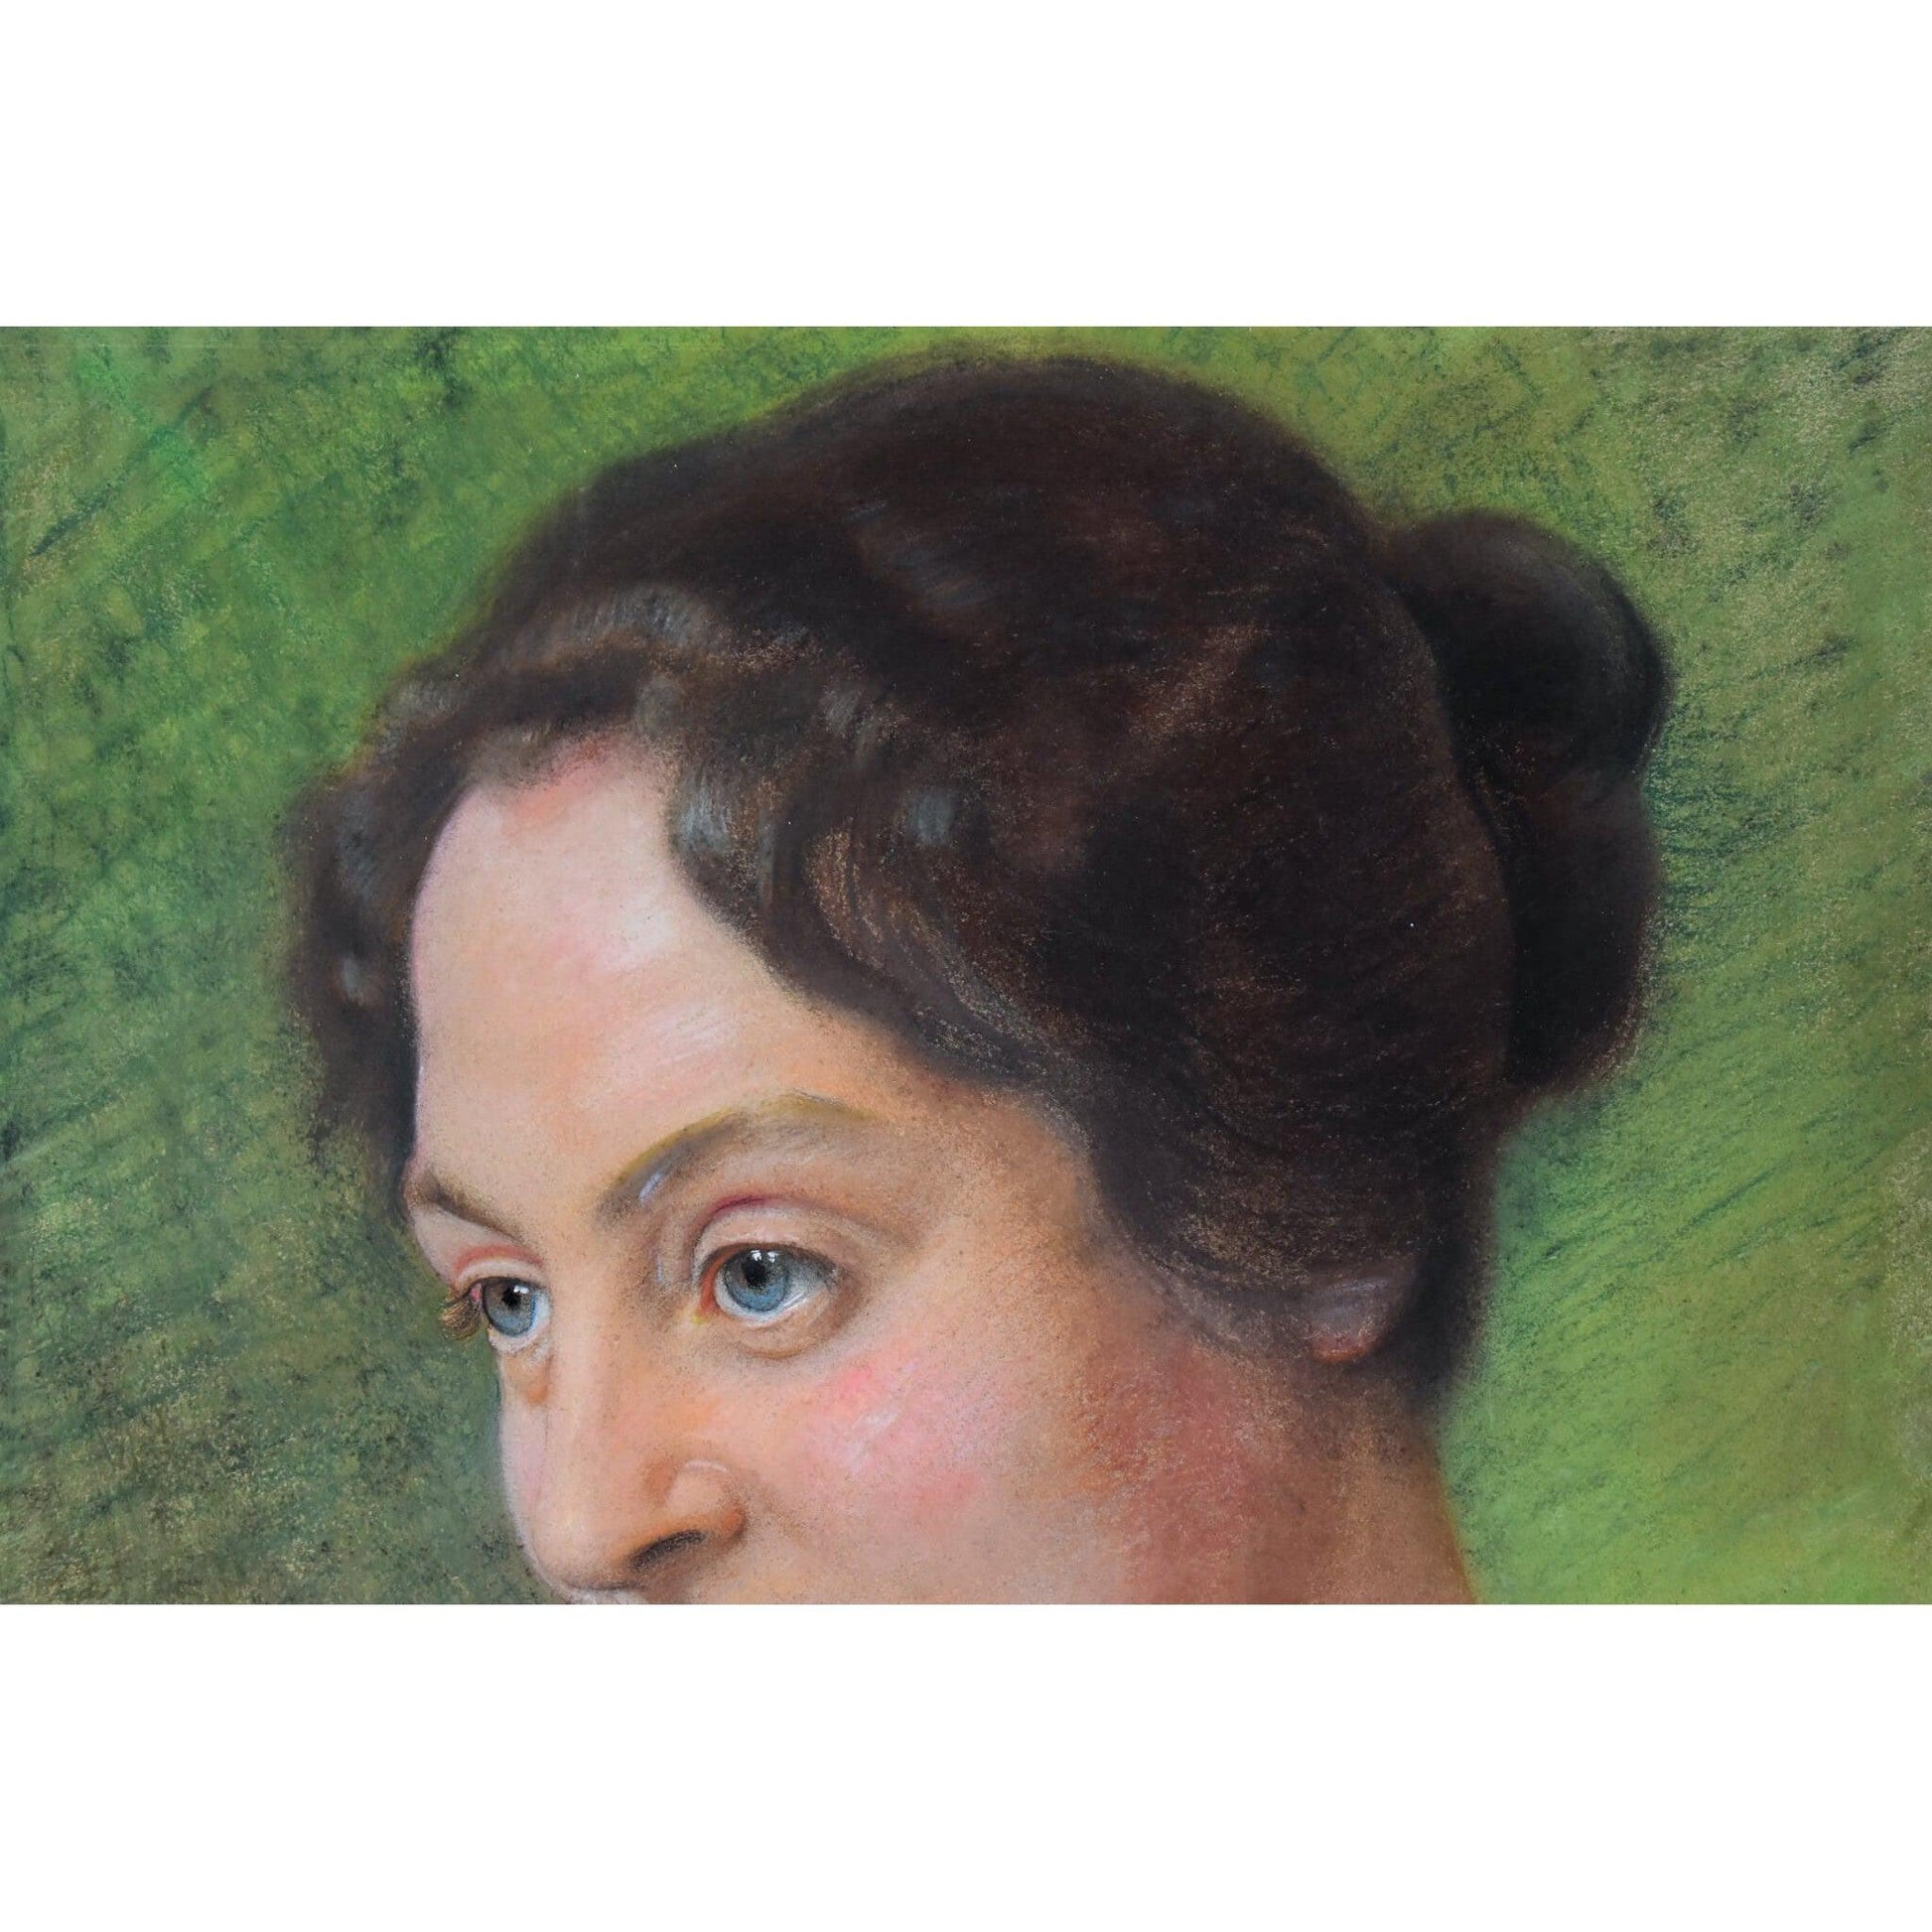 Antique portrait painting woman pastel original 1919 by Paul Beckert for sale at Winckelmann Gallery